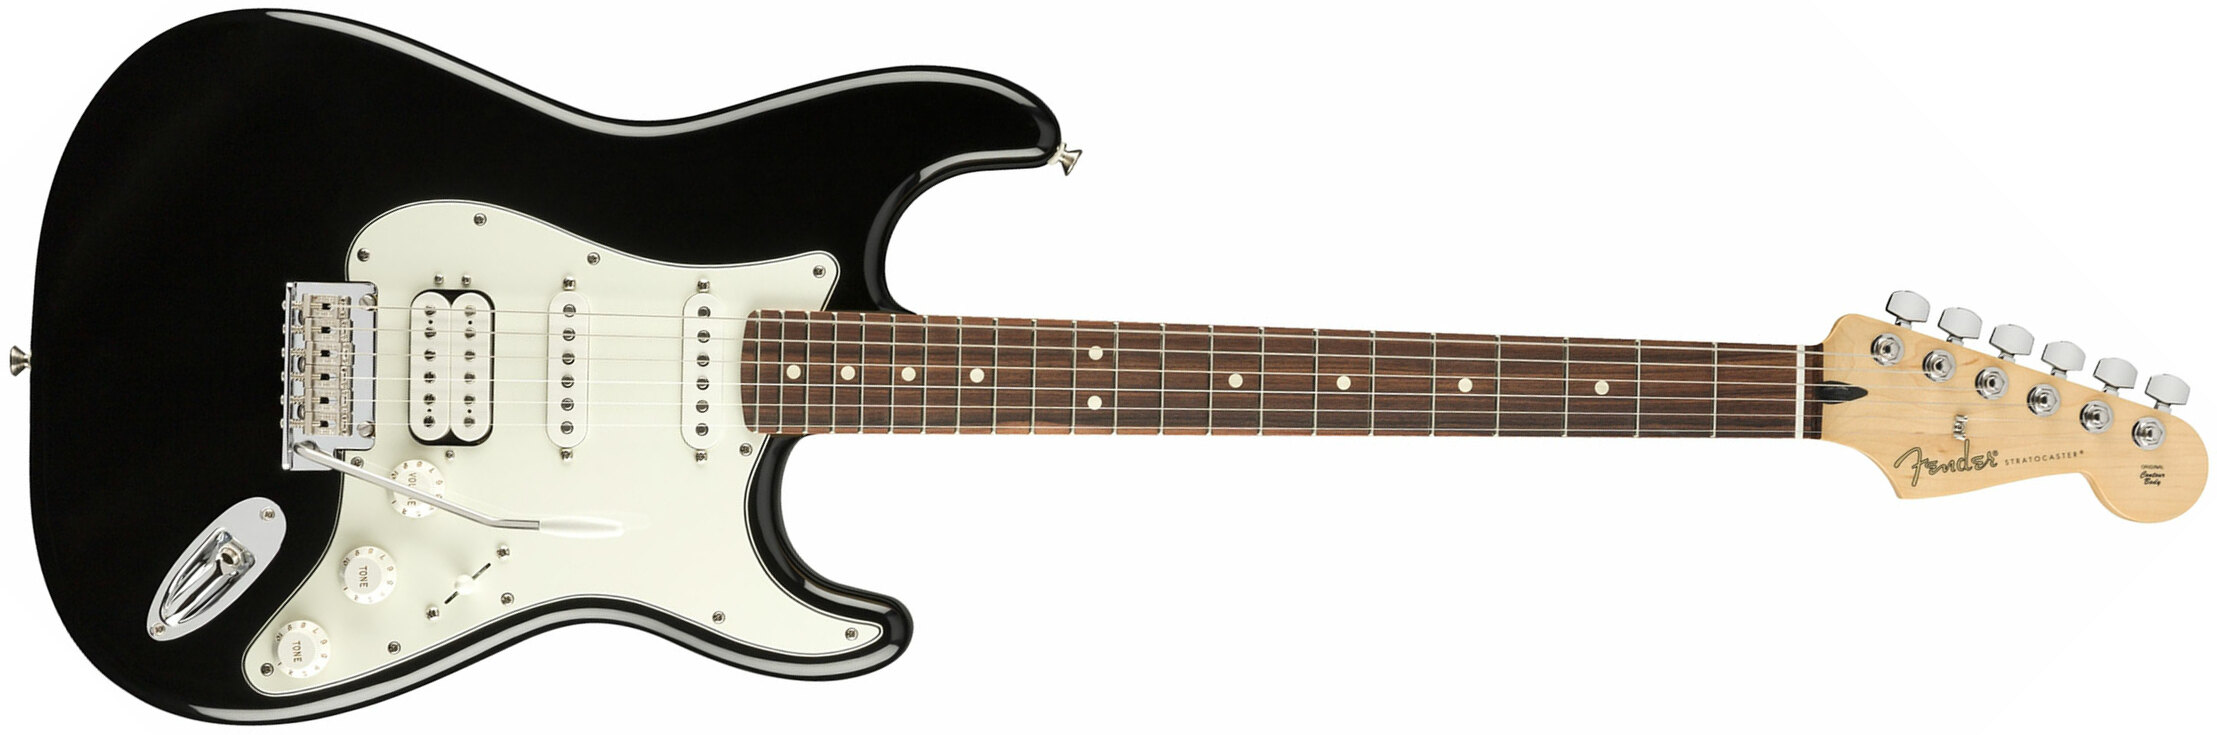 Fender Strat Player Mex Hss Pf - Black - Str shape electric guitar - Main picture